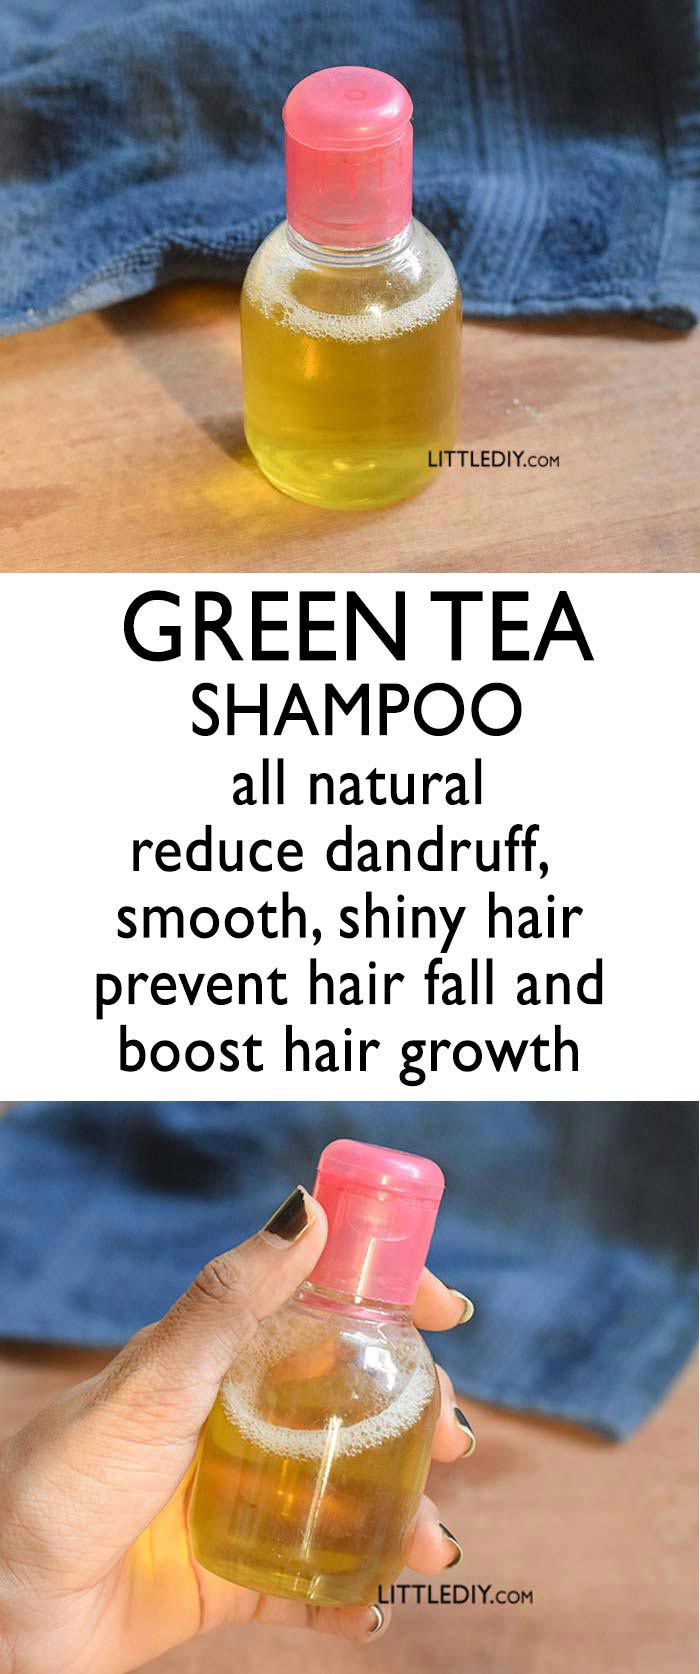 GREEN TEA SHAMPOO for hair growth